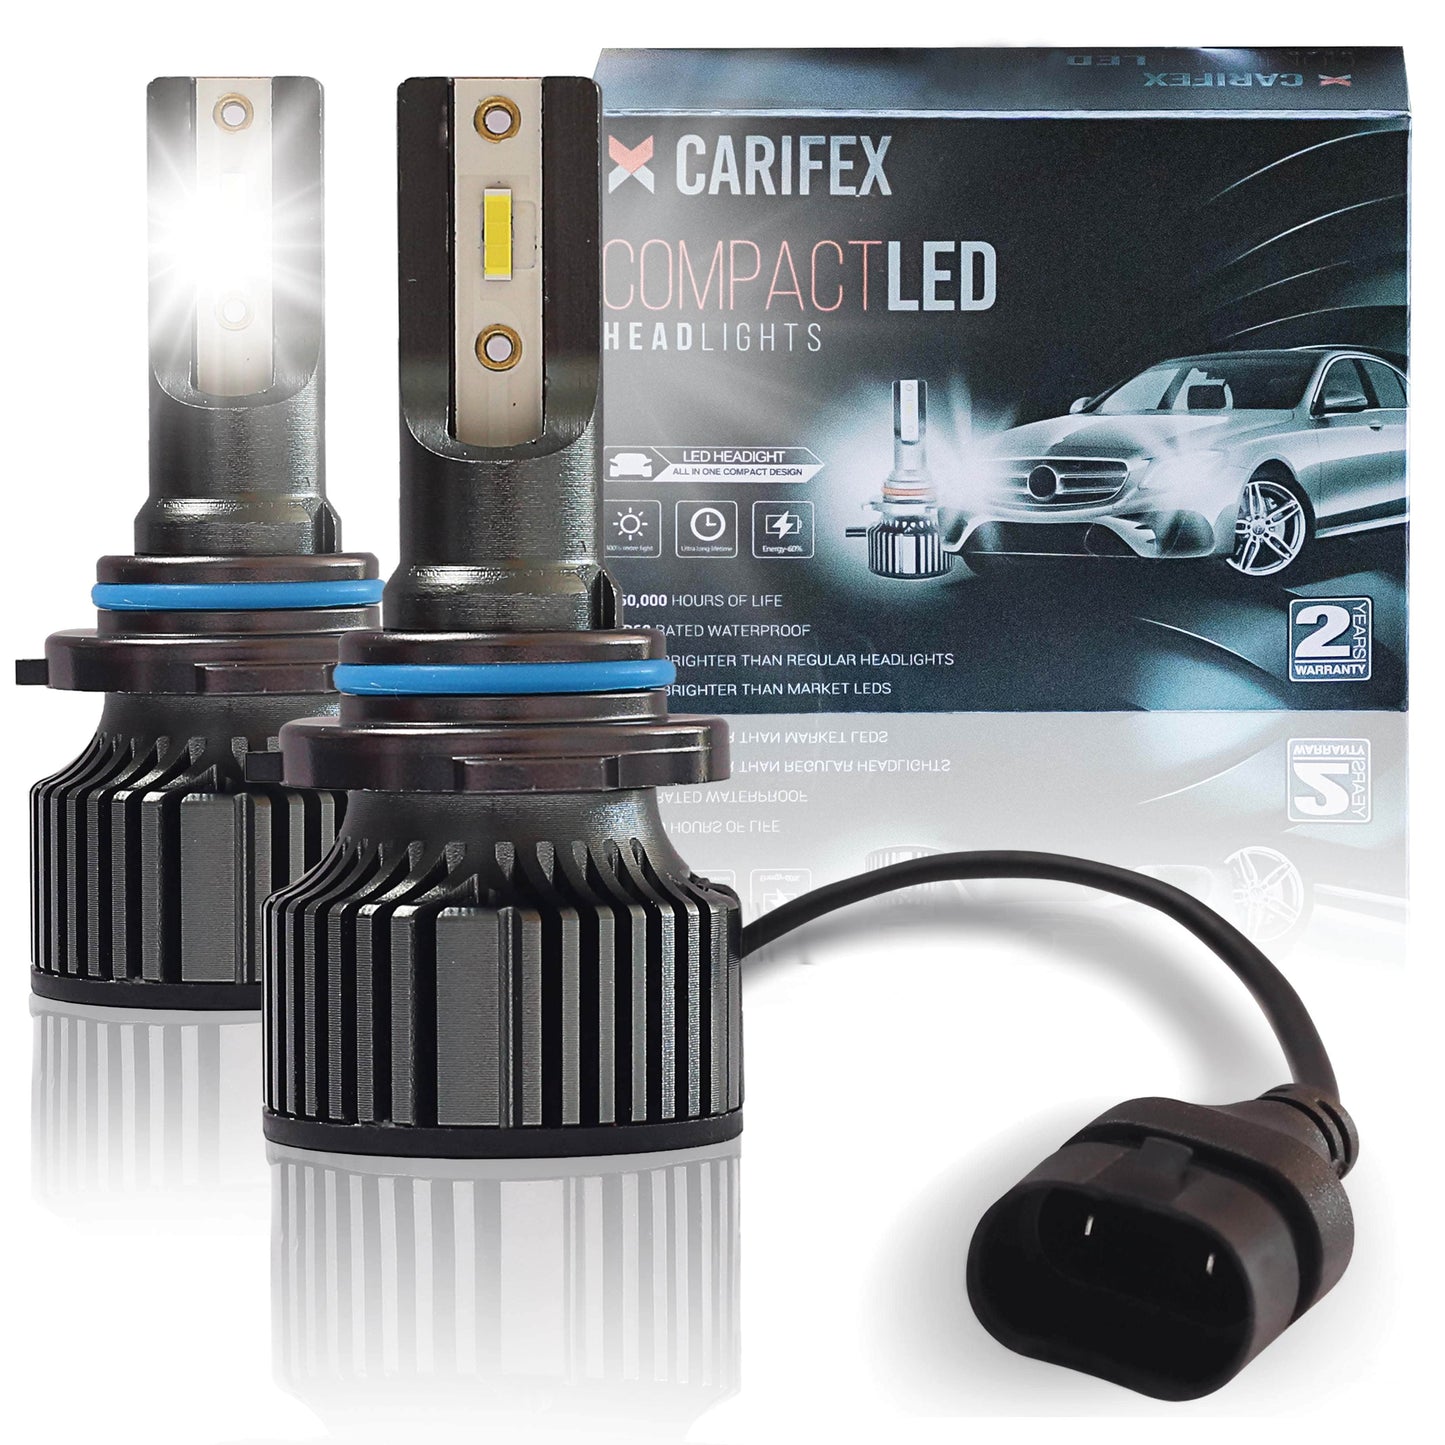 Carifex Compact LED Headlight Compact 9006 LED Headlight Bulbs